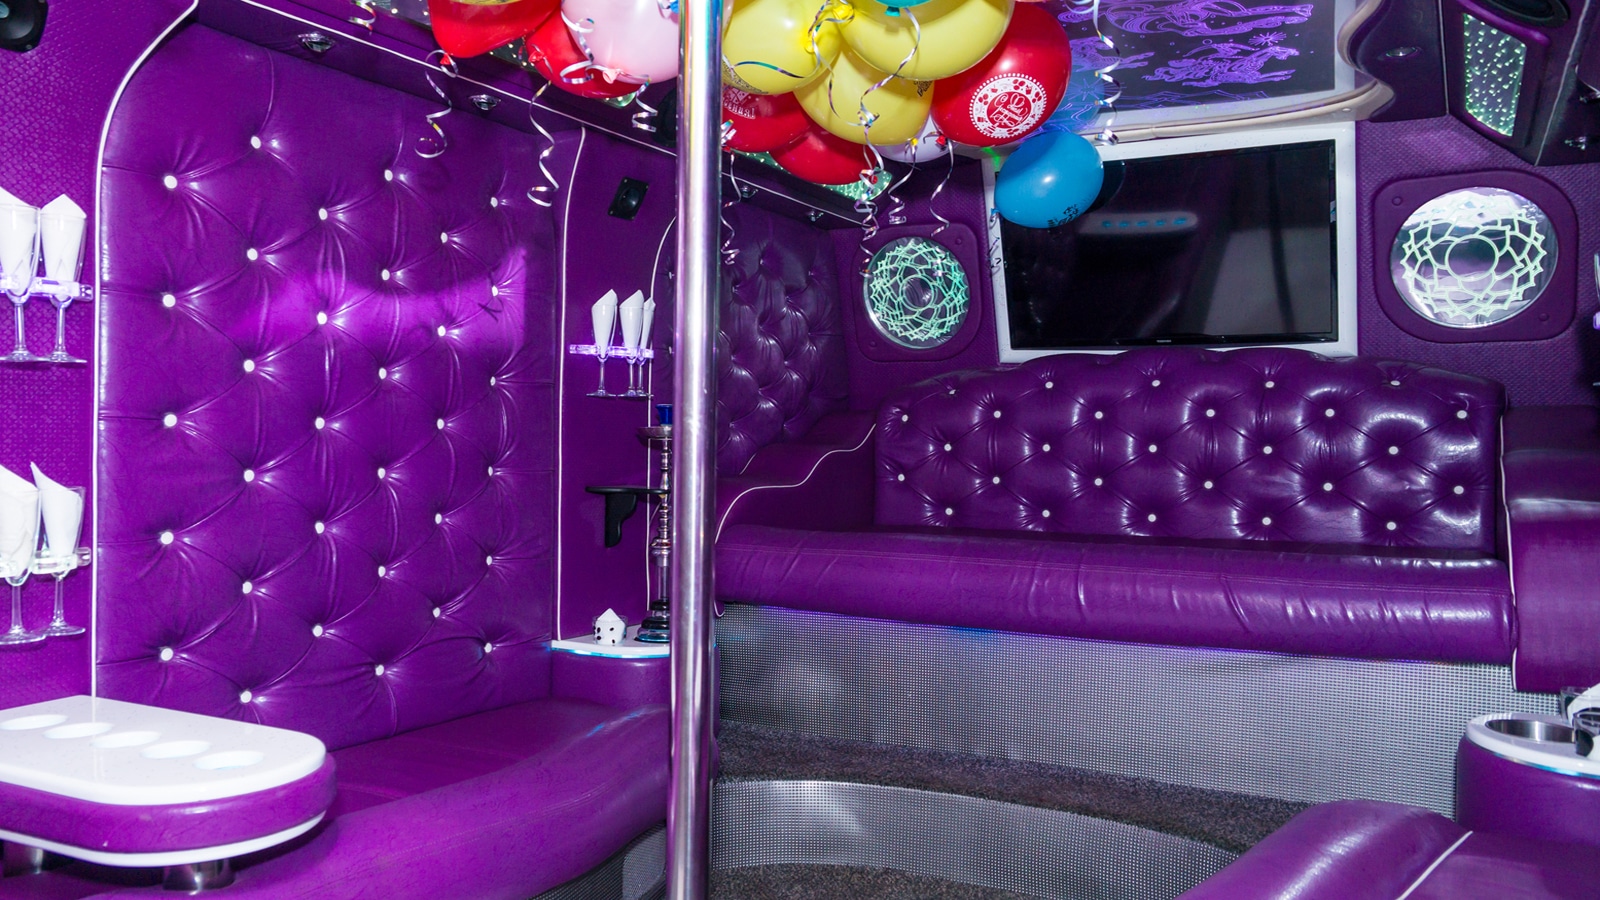 Luxury Party Buses Inside - Nashville Bachelorette Party Activities